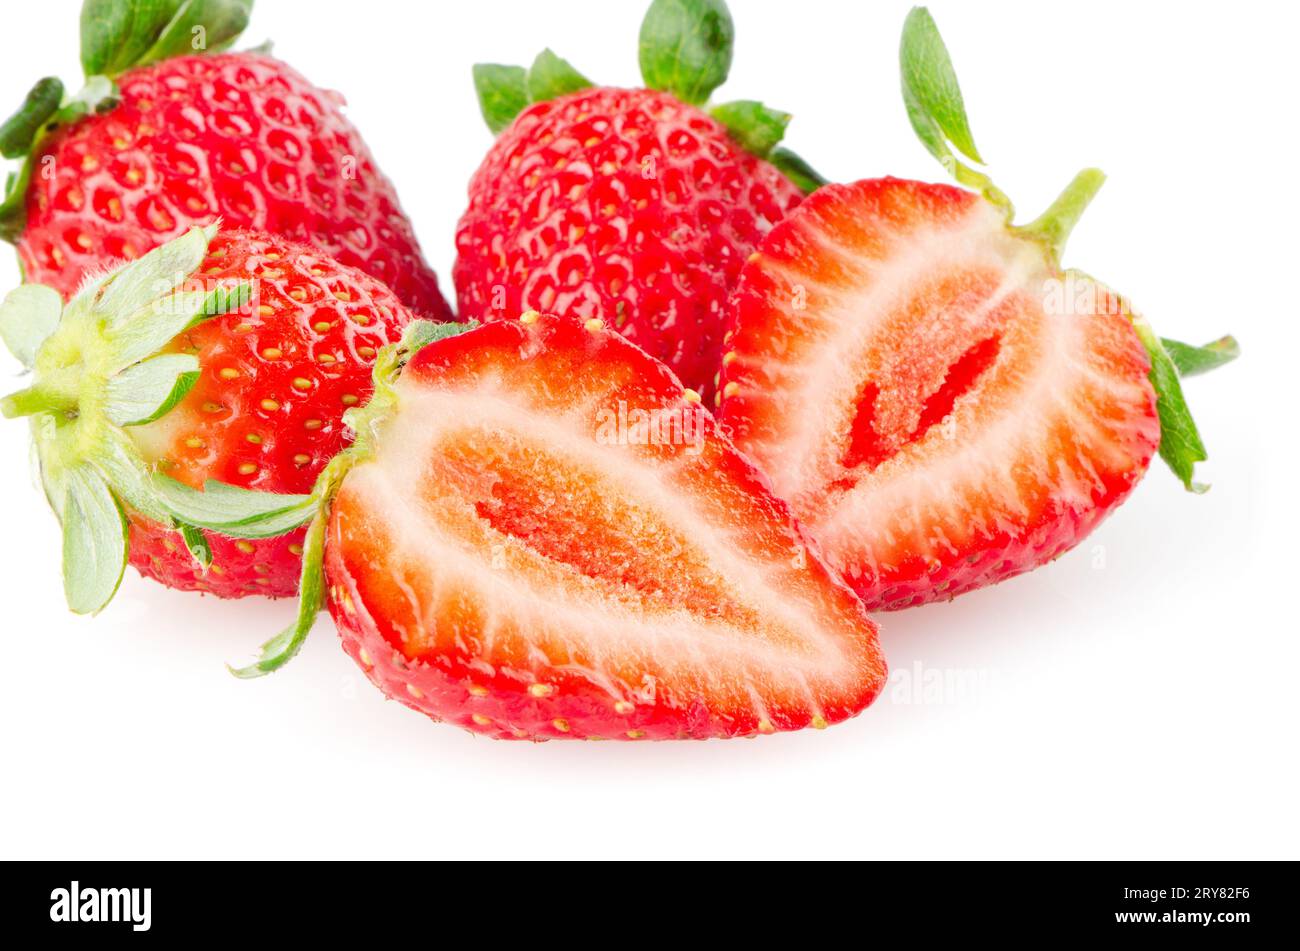 Appetizing strawberries Stock Photo